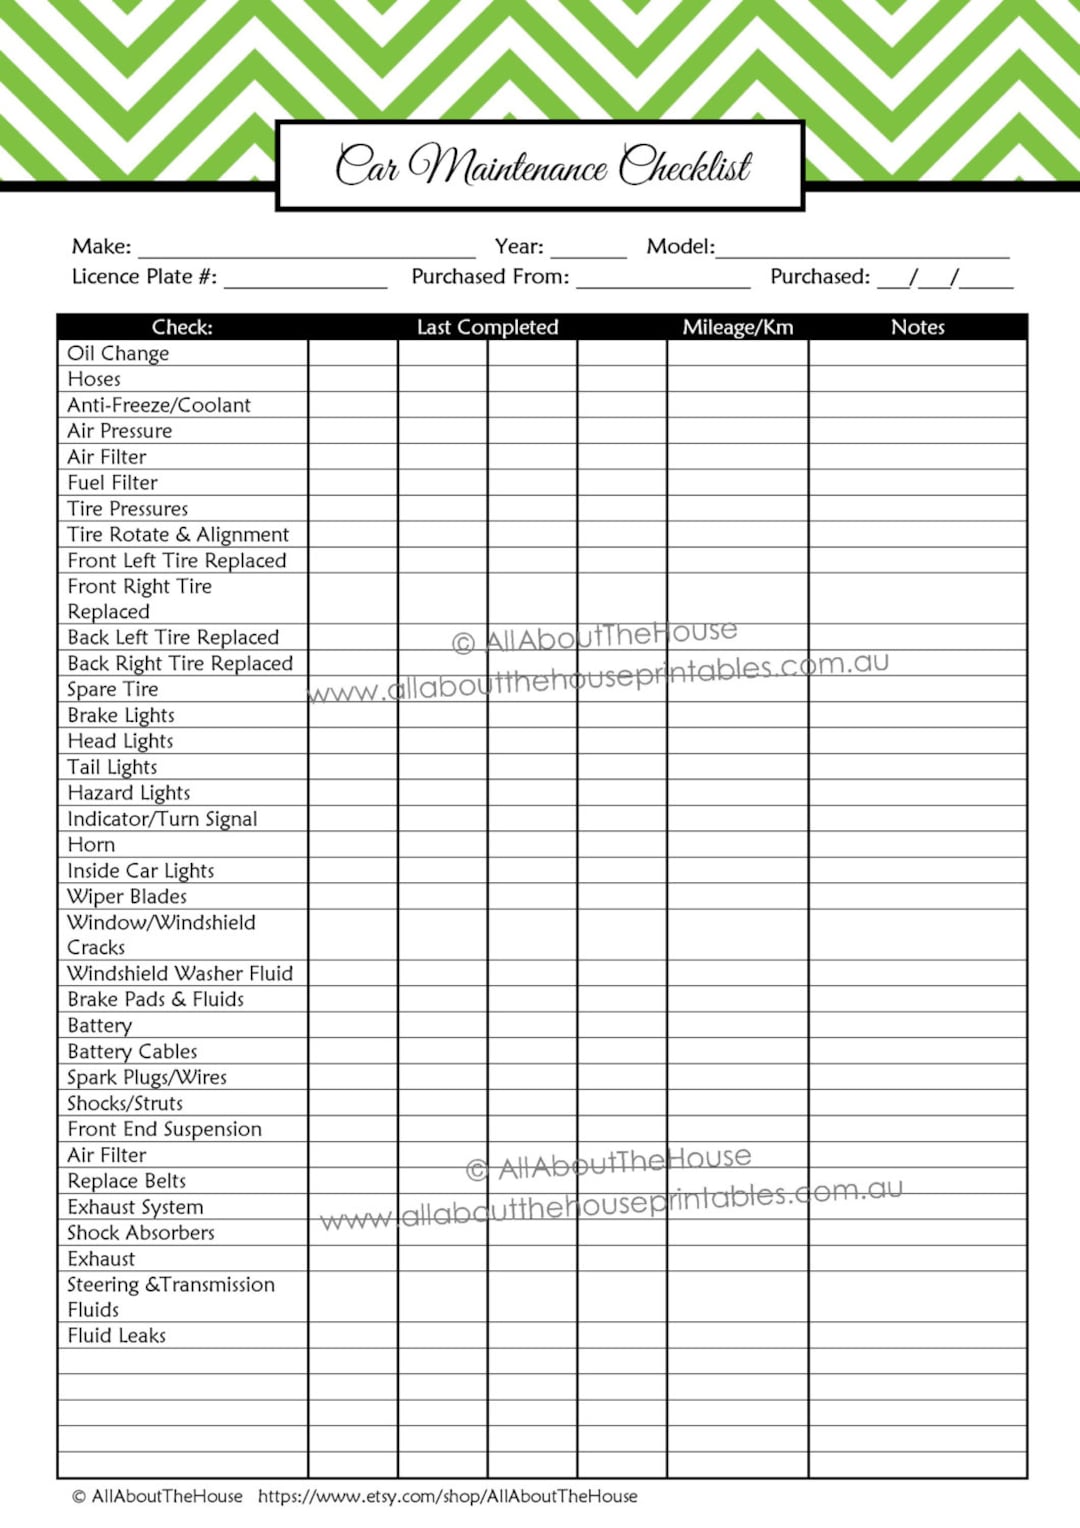 Your Auto Maintenance Checklist